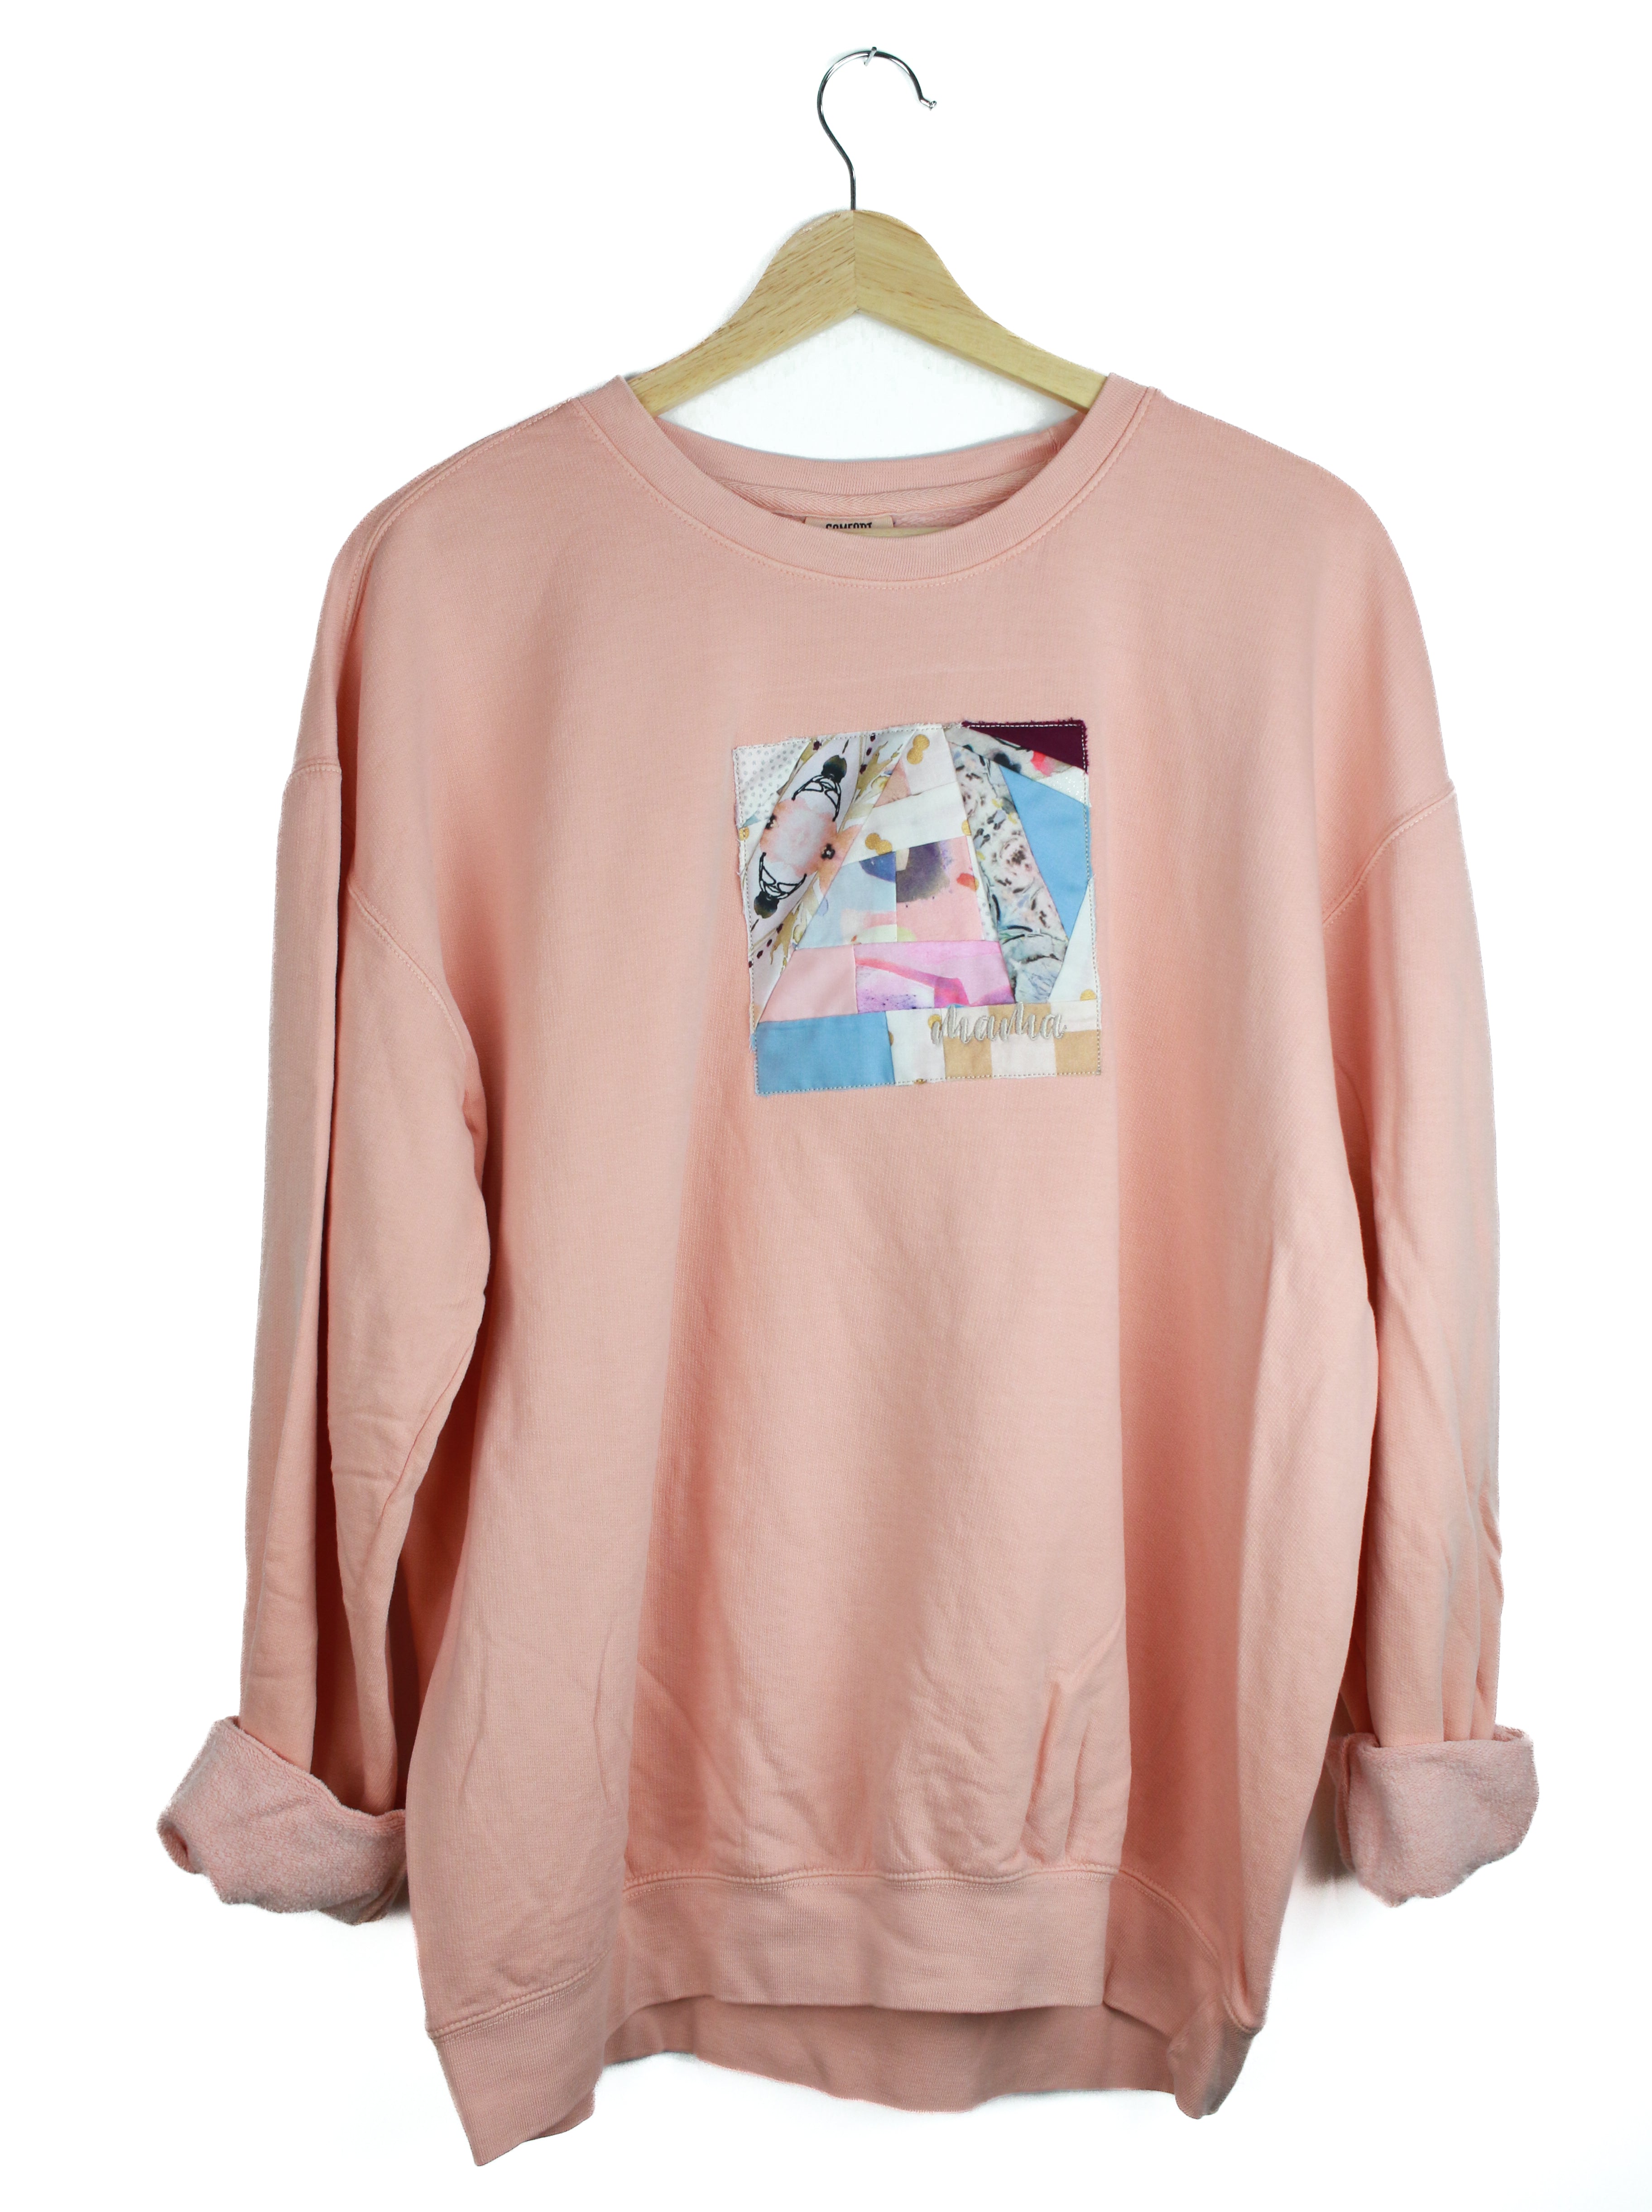 Breezy Lightweight Blush Sweatshirt (Size L)